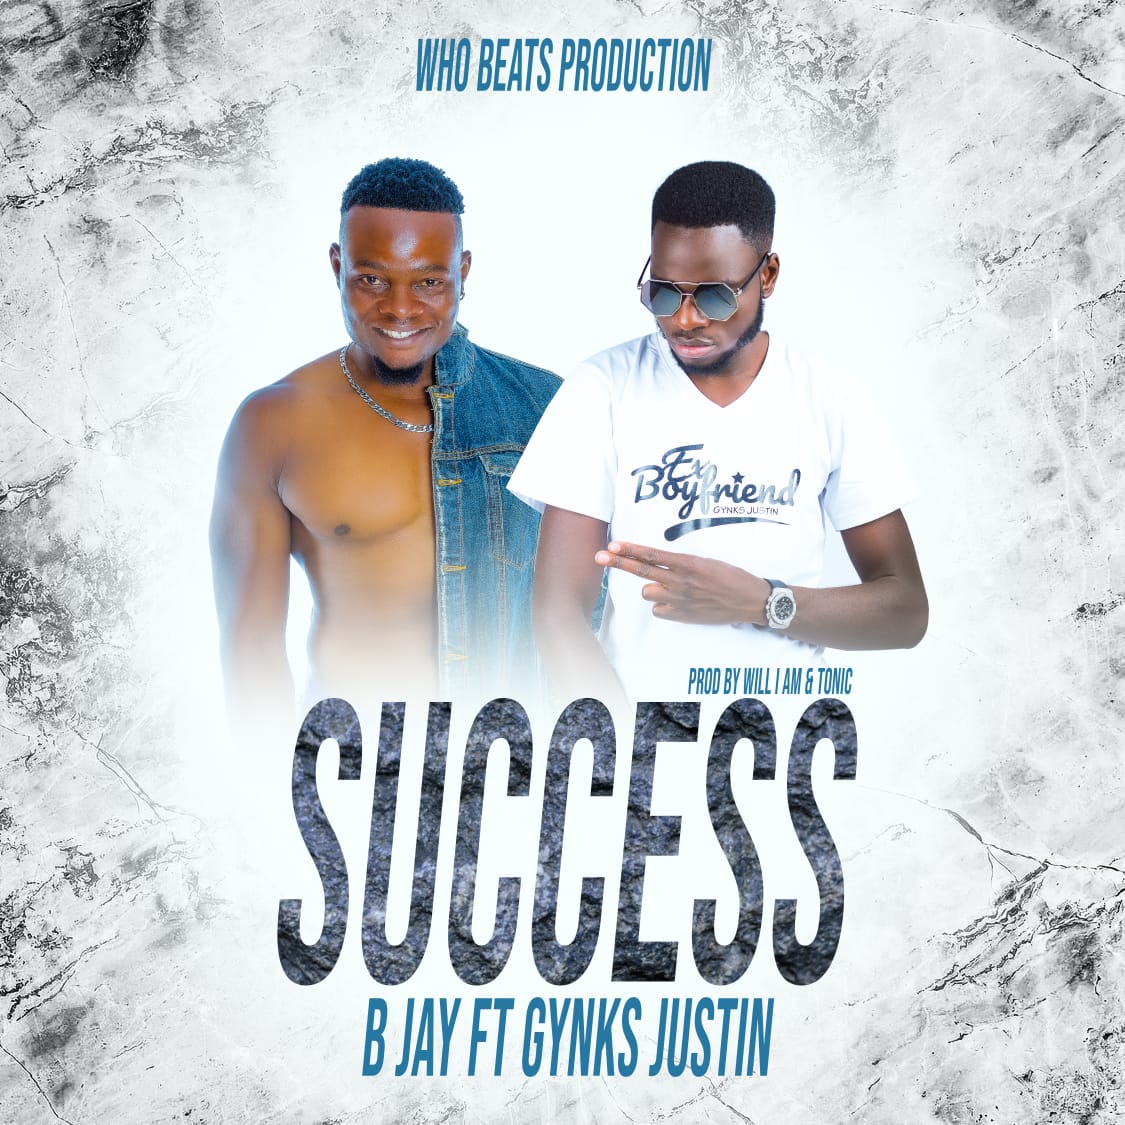 B Jay ft. Gynks Justin - Success